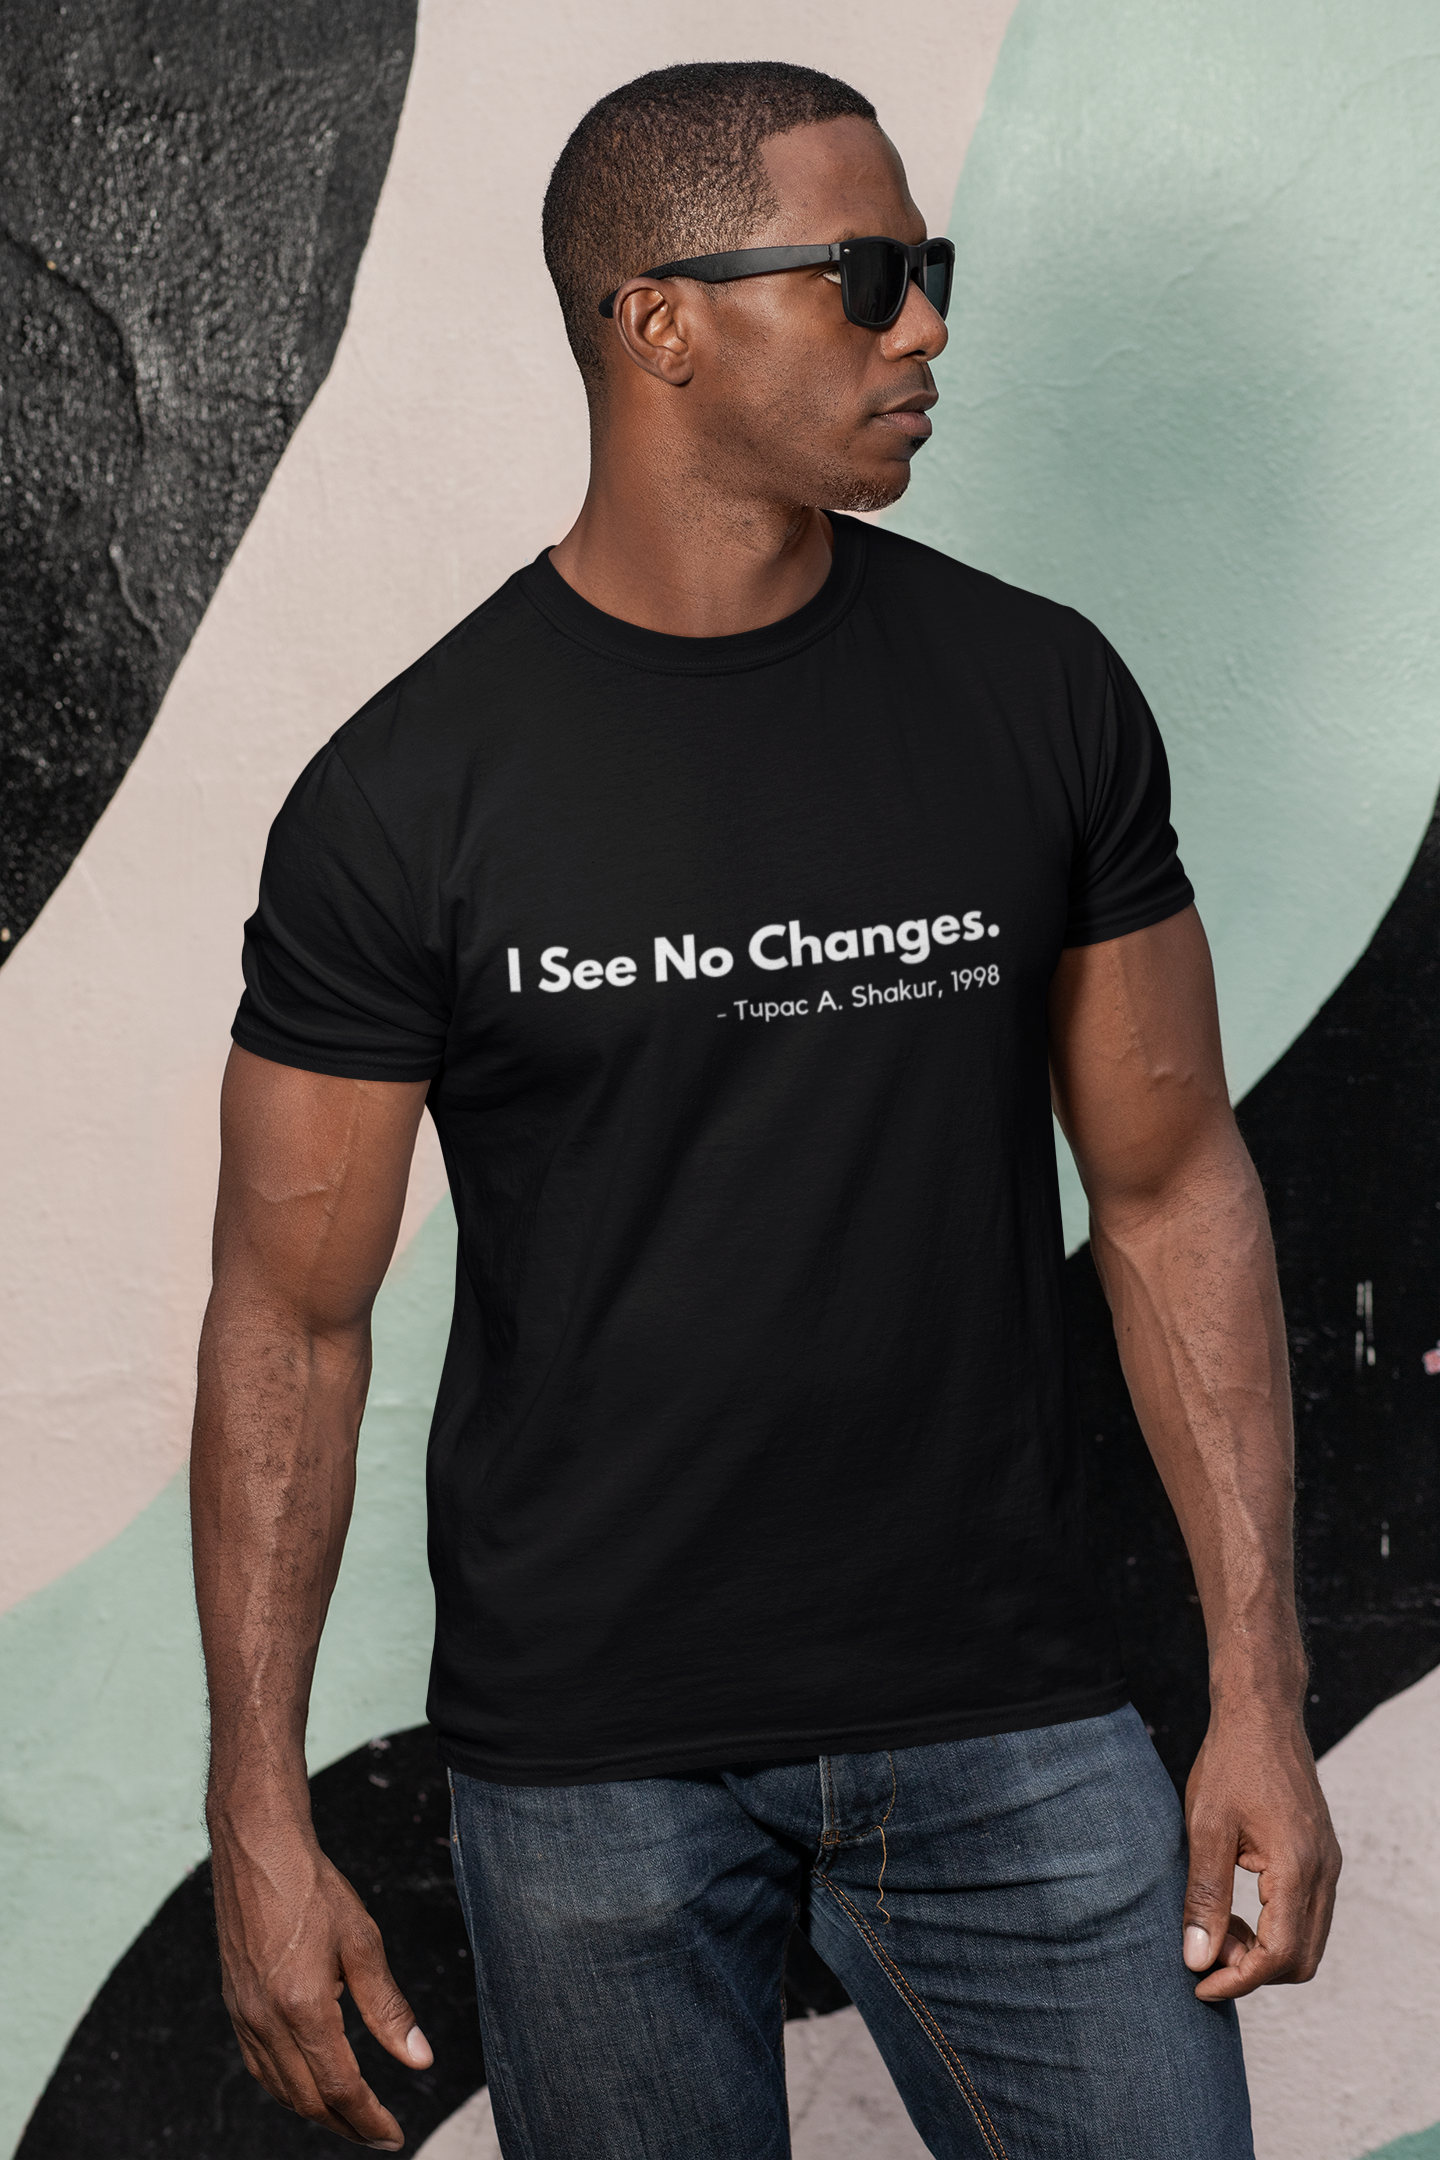 I See No Change Tupac Quote Black Lives Matter Shirt - Funny Labrador Cute Shirt Labradors Labs